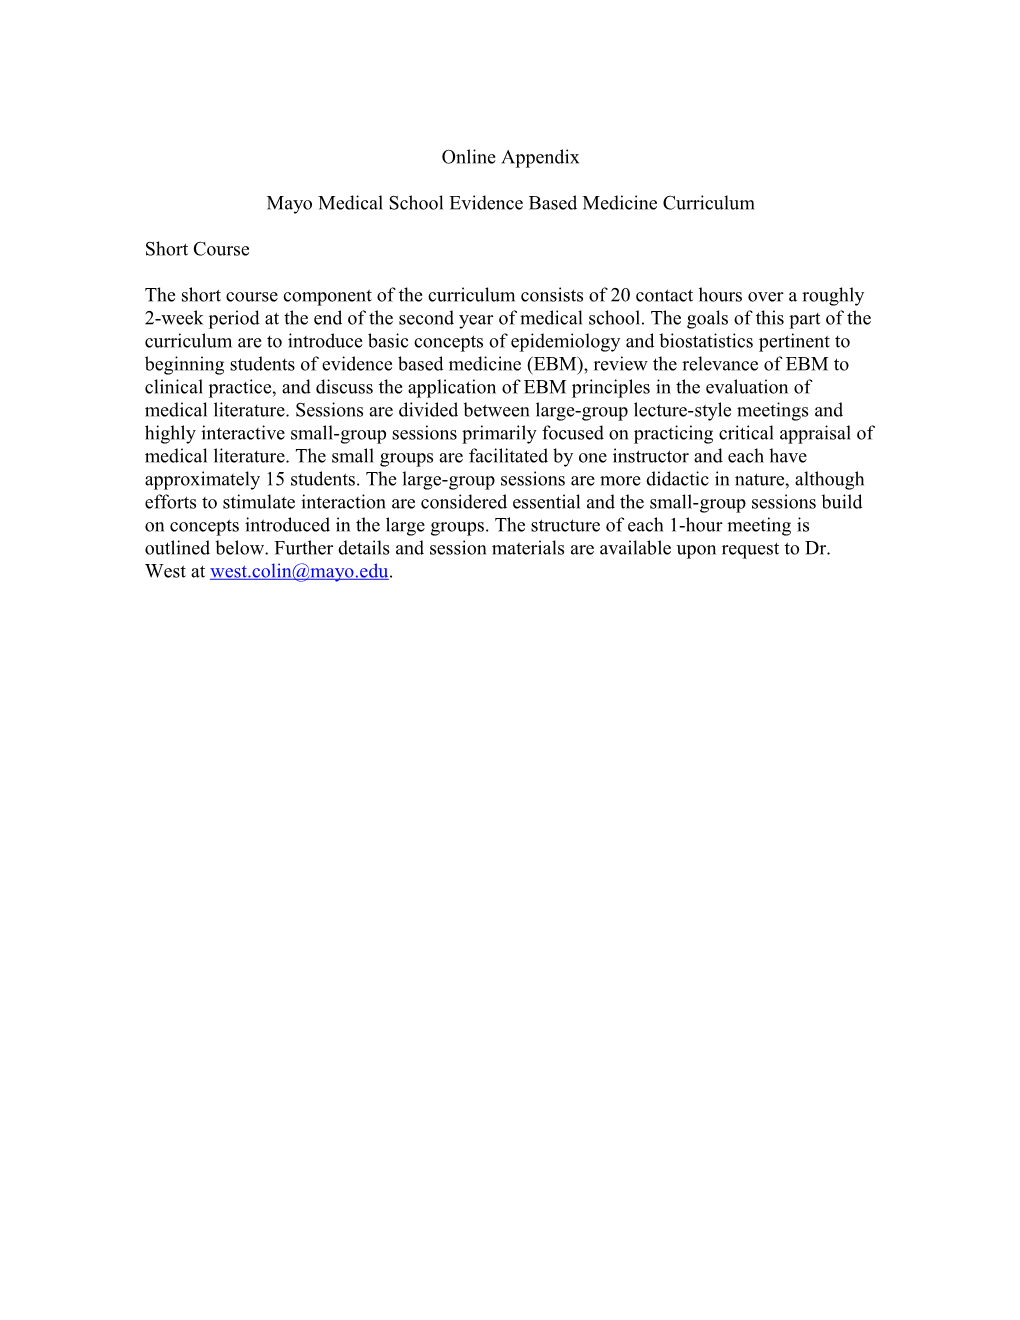 Mayomedicalschool Evidence Based Medicine Curriculum